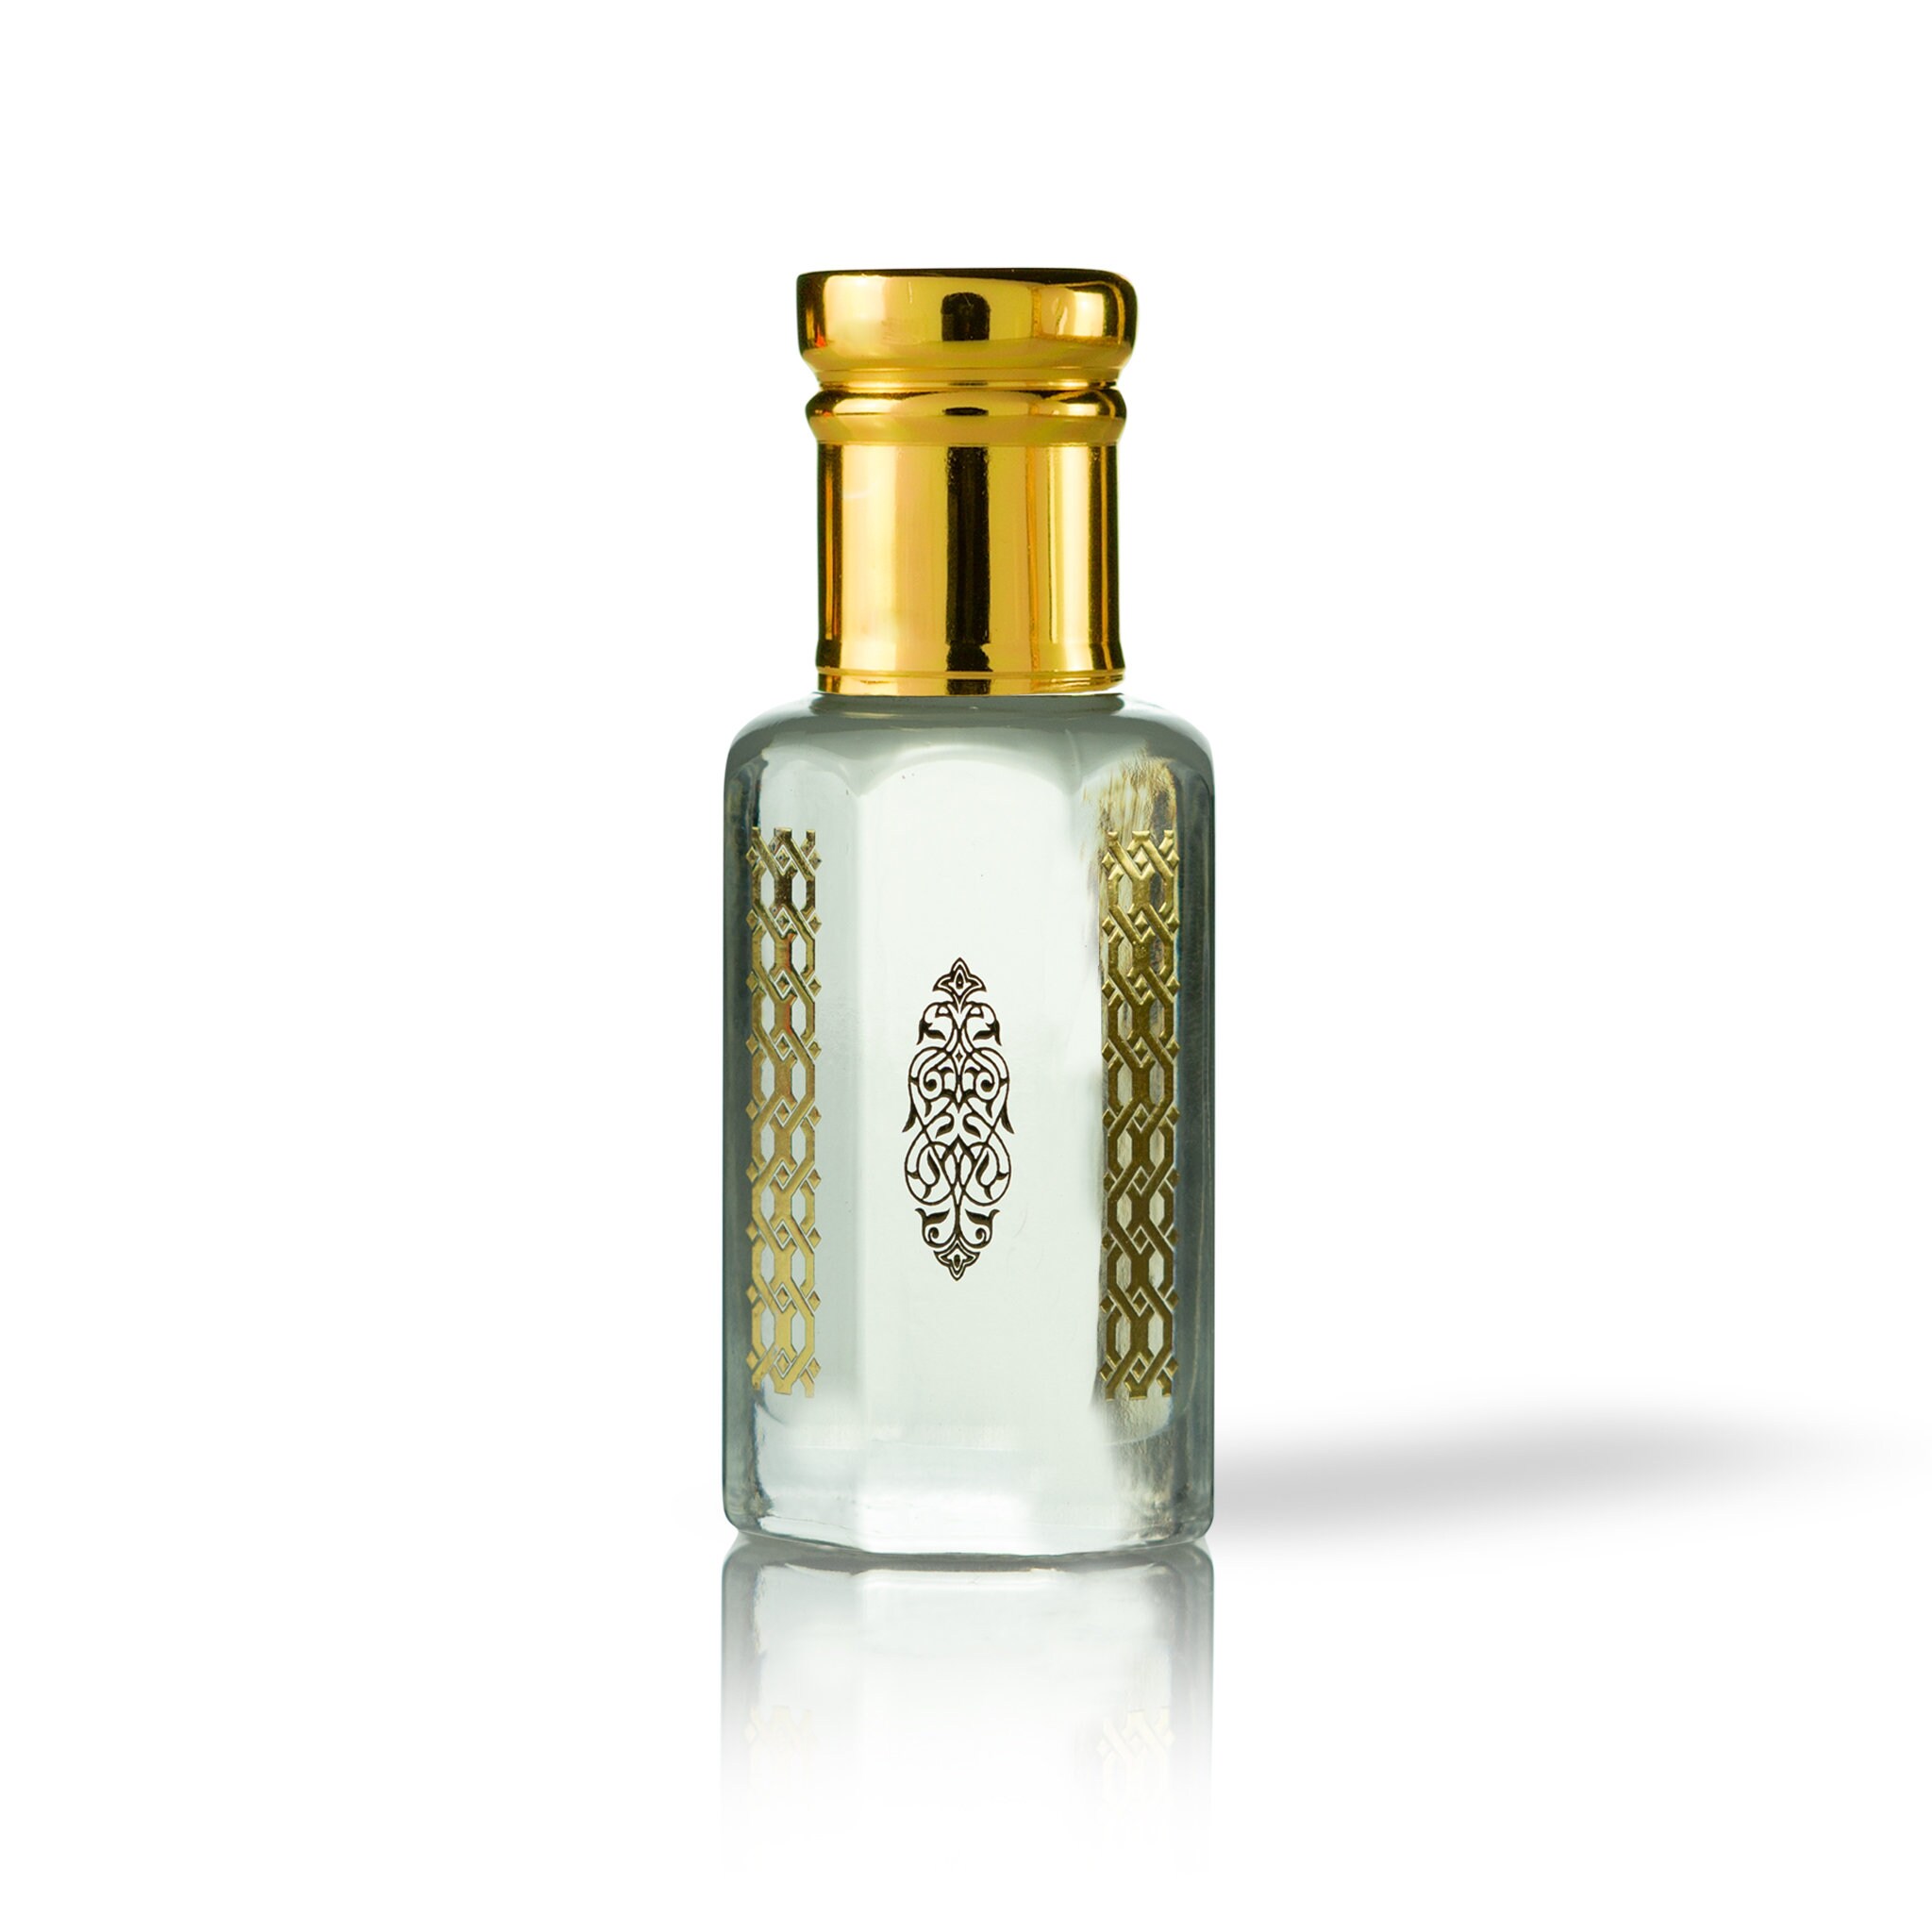 White Egyptian Musk | Premium Perfume Oil | Attar Oil | Alcohol Free | Vegan & Cruelty Free | by Tarife Attar